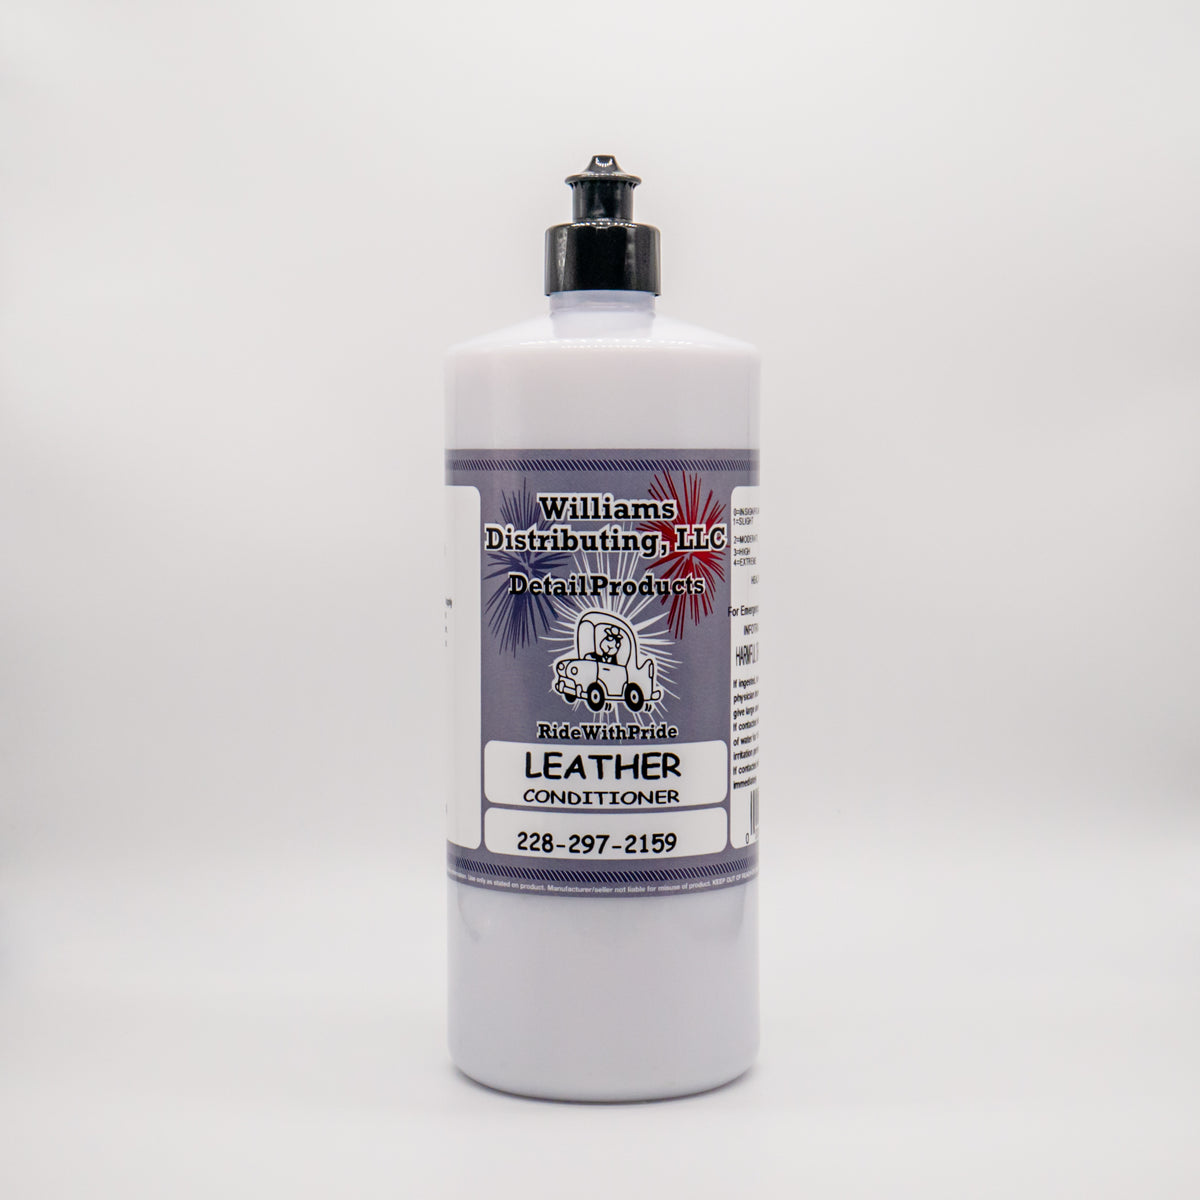 Leather Conditioner – Williams Distributing